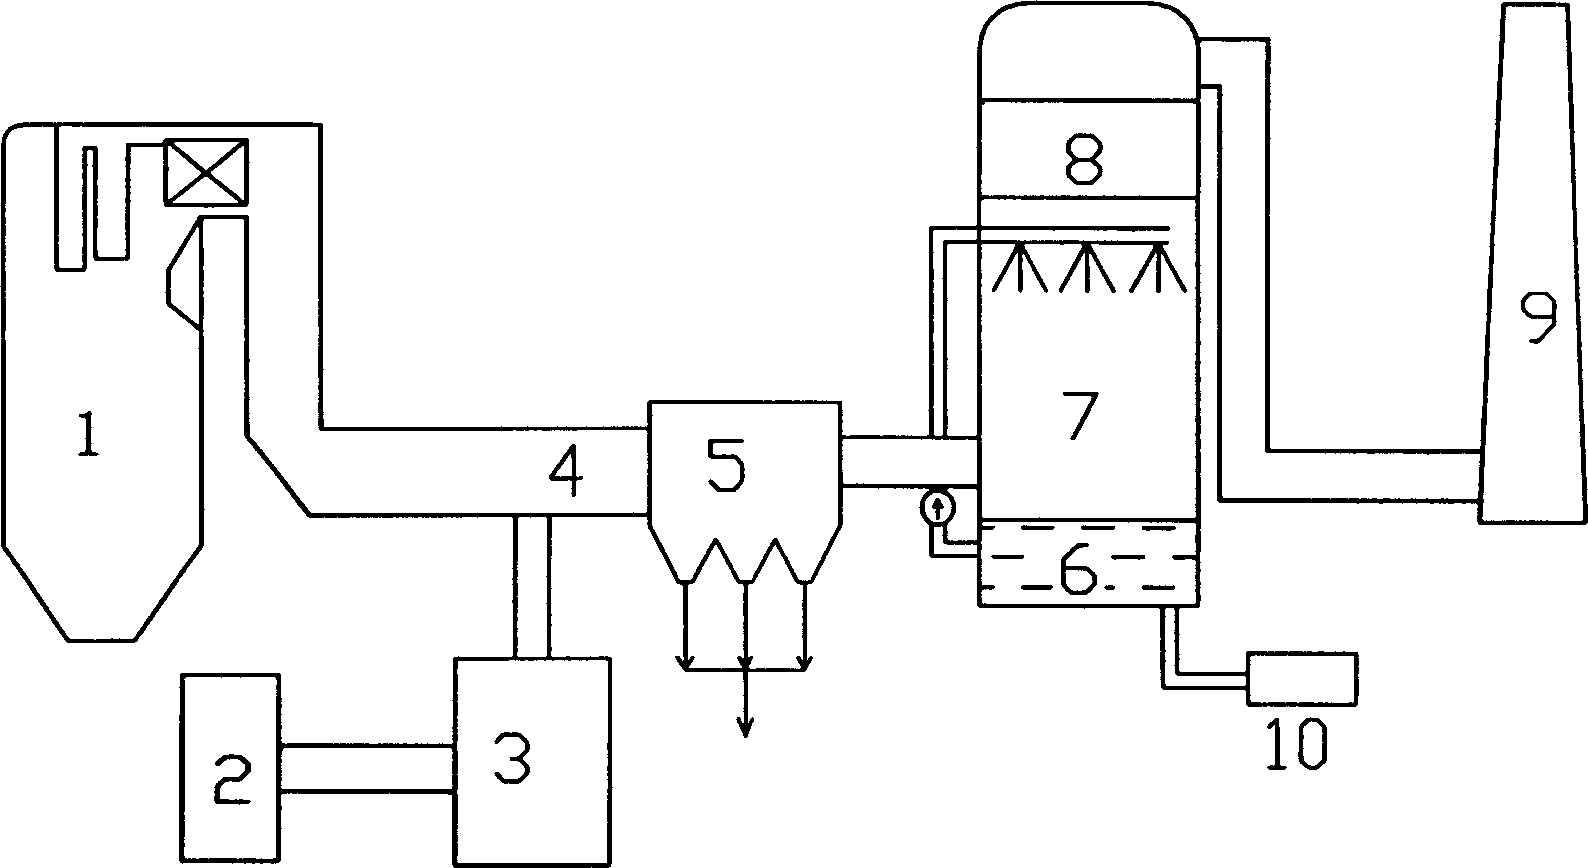 Ozone oxidation and denitration method of boiler flue gas